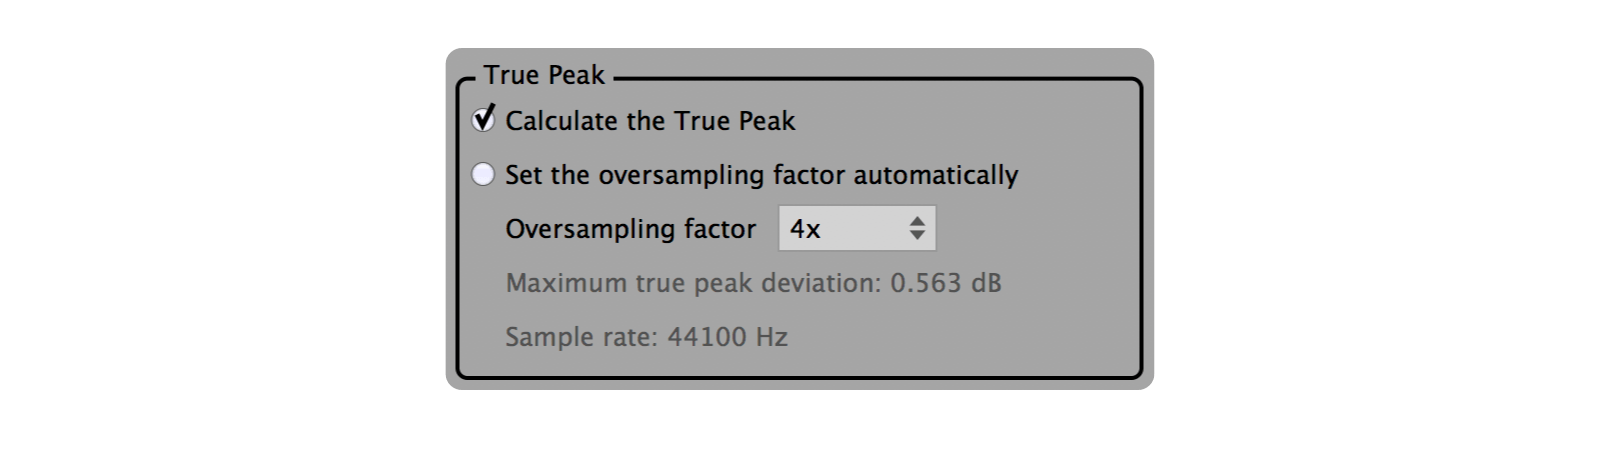 True peak settings.